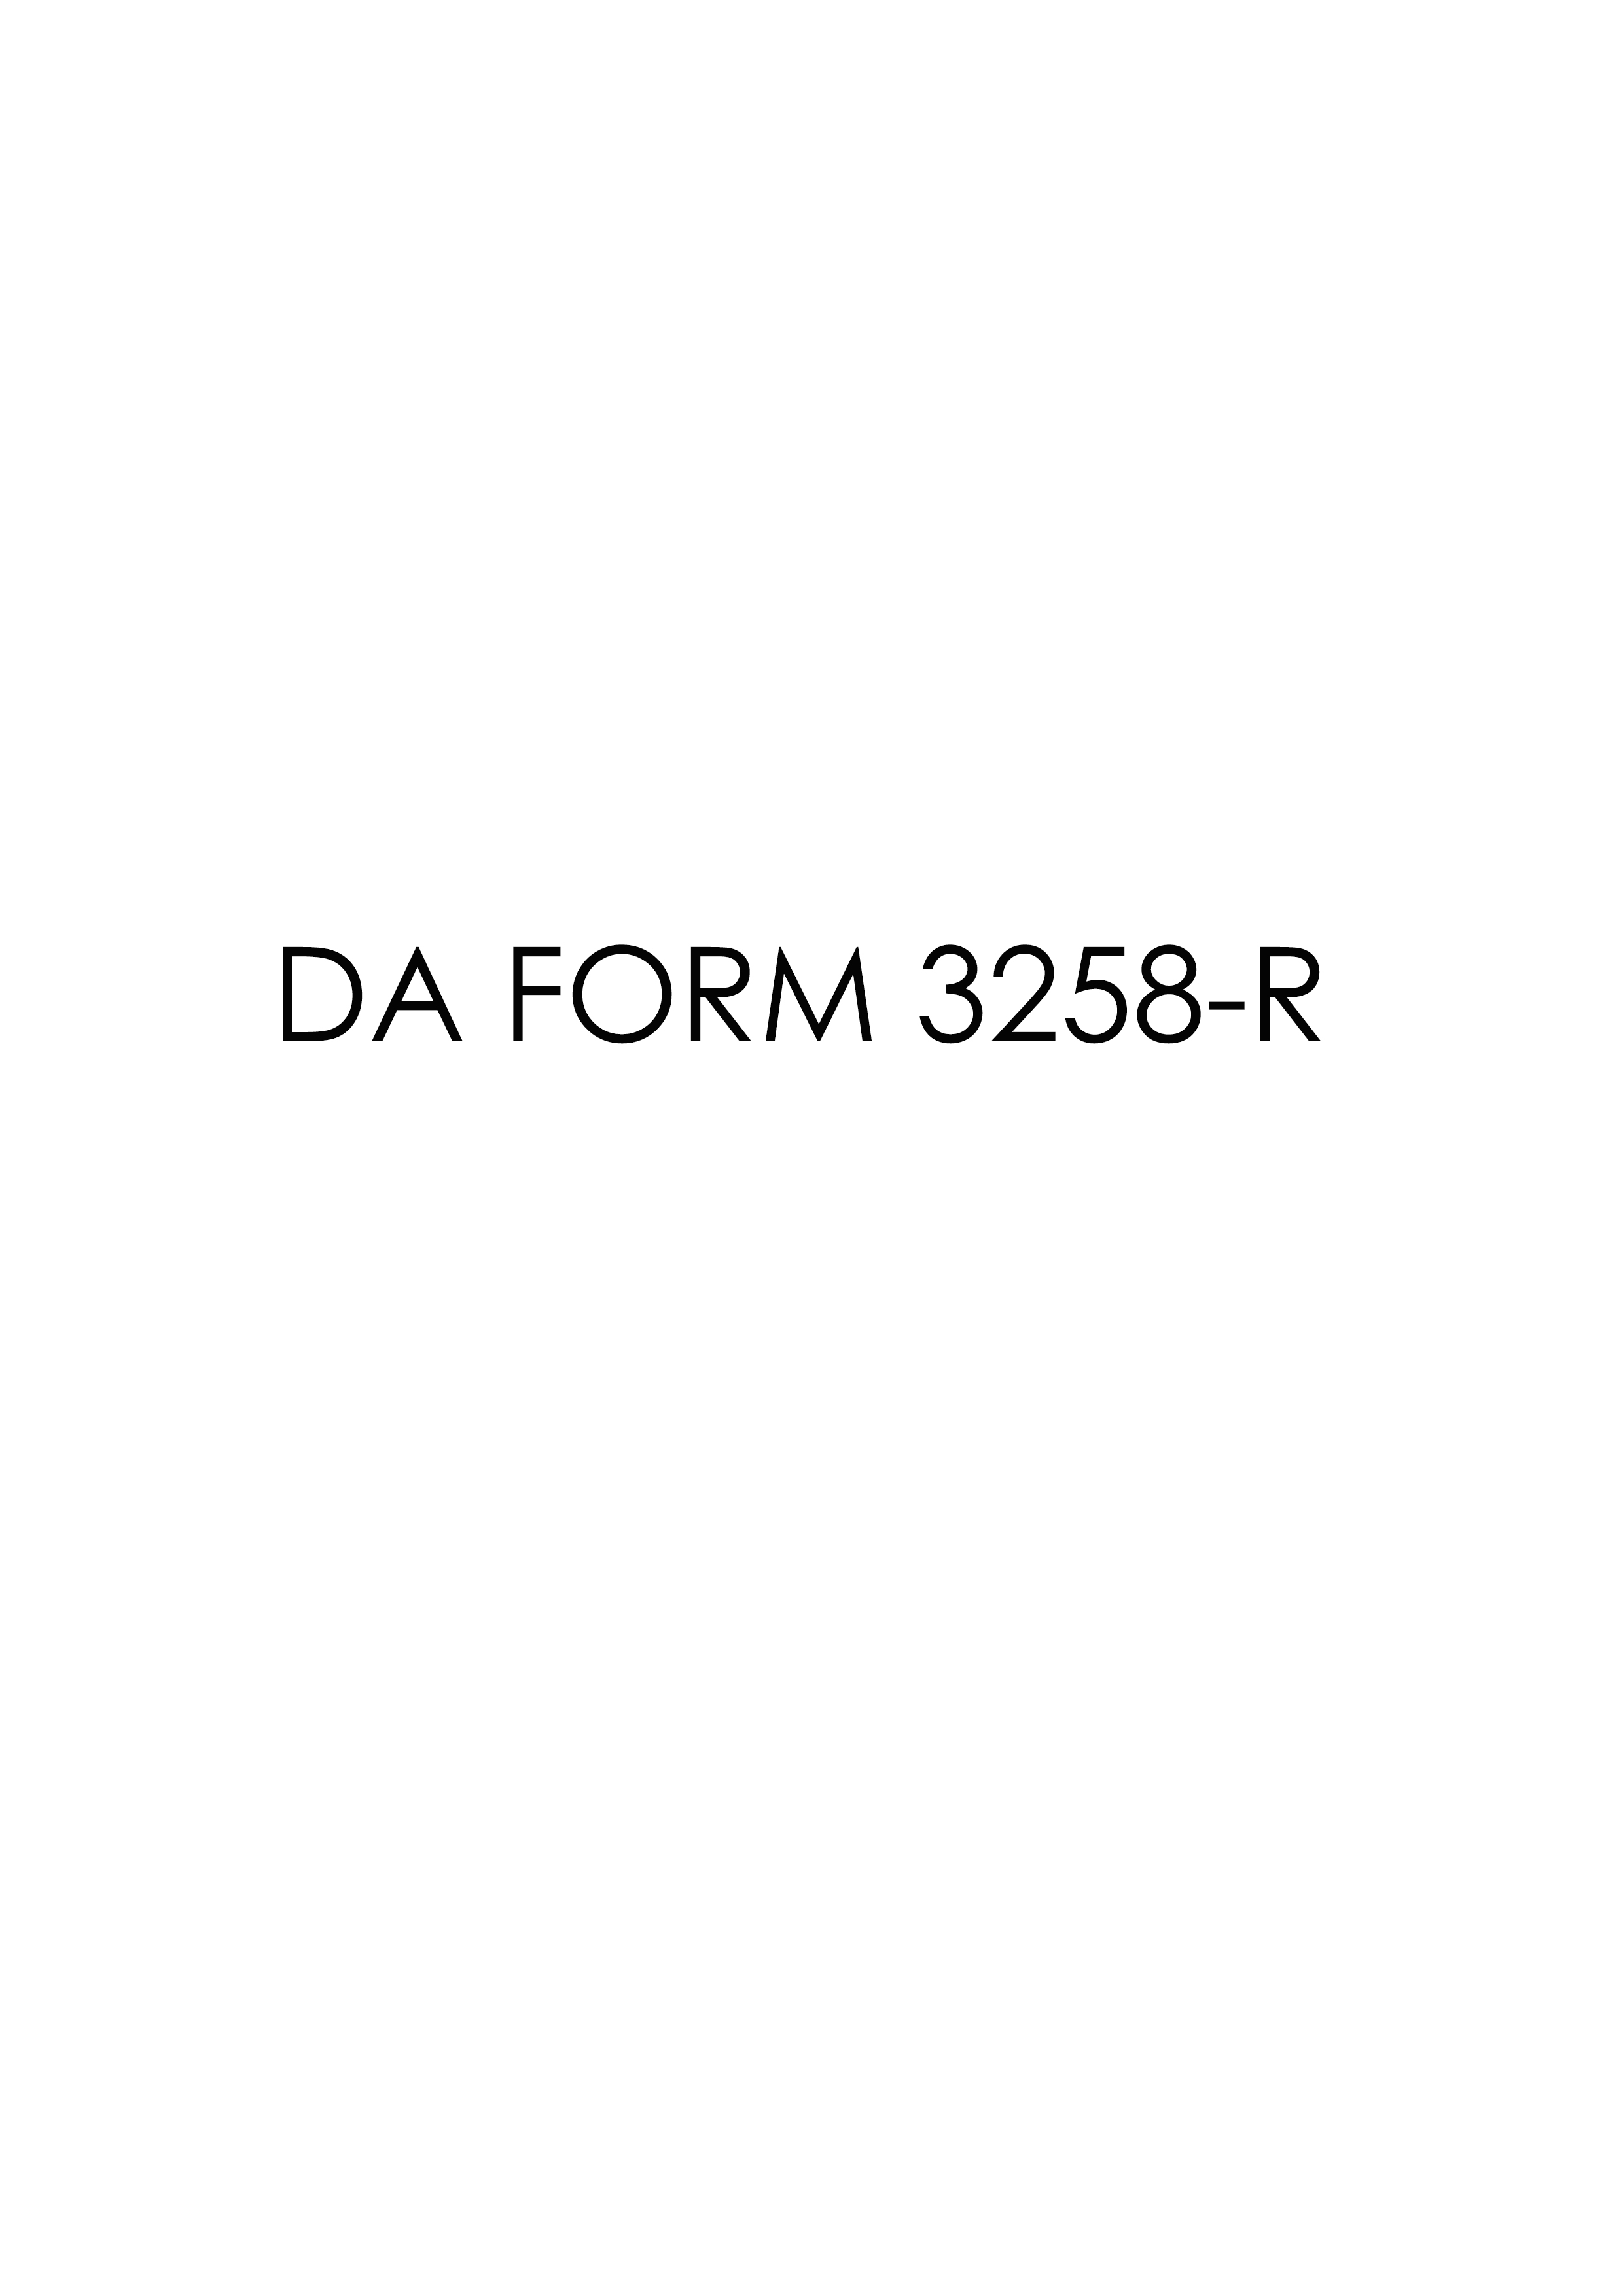 da Form 3258-R fillable